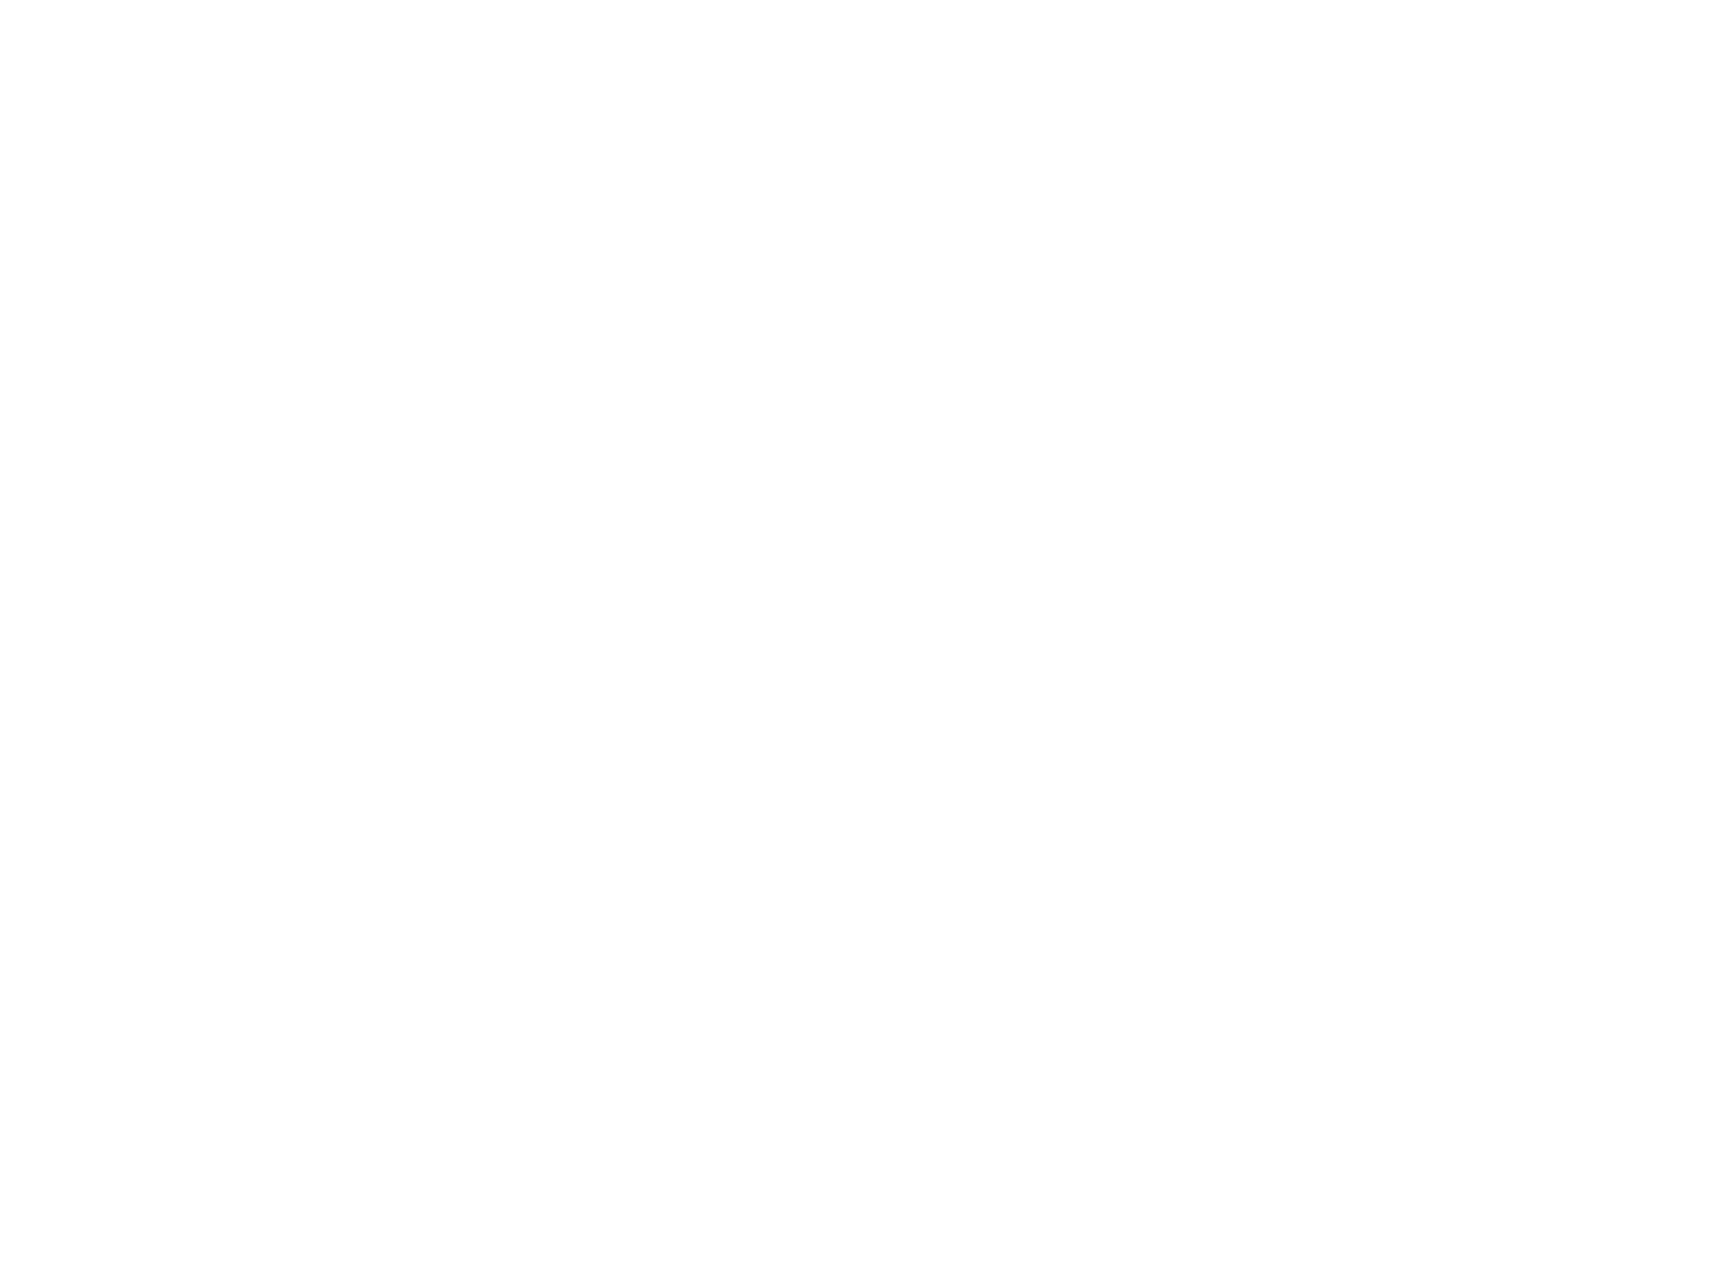 Forbes Top 100 Charities Award